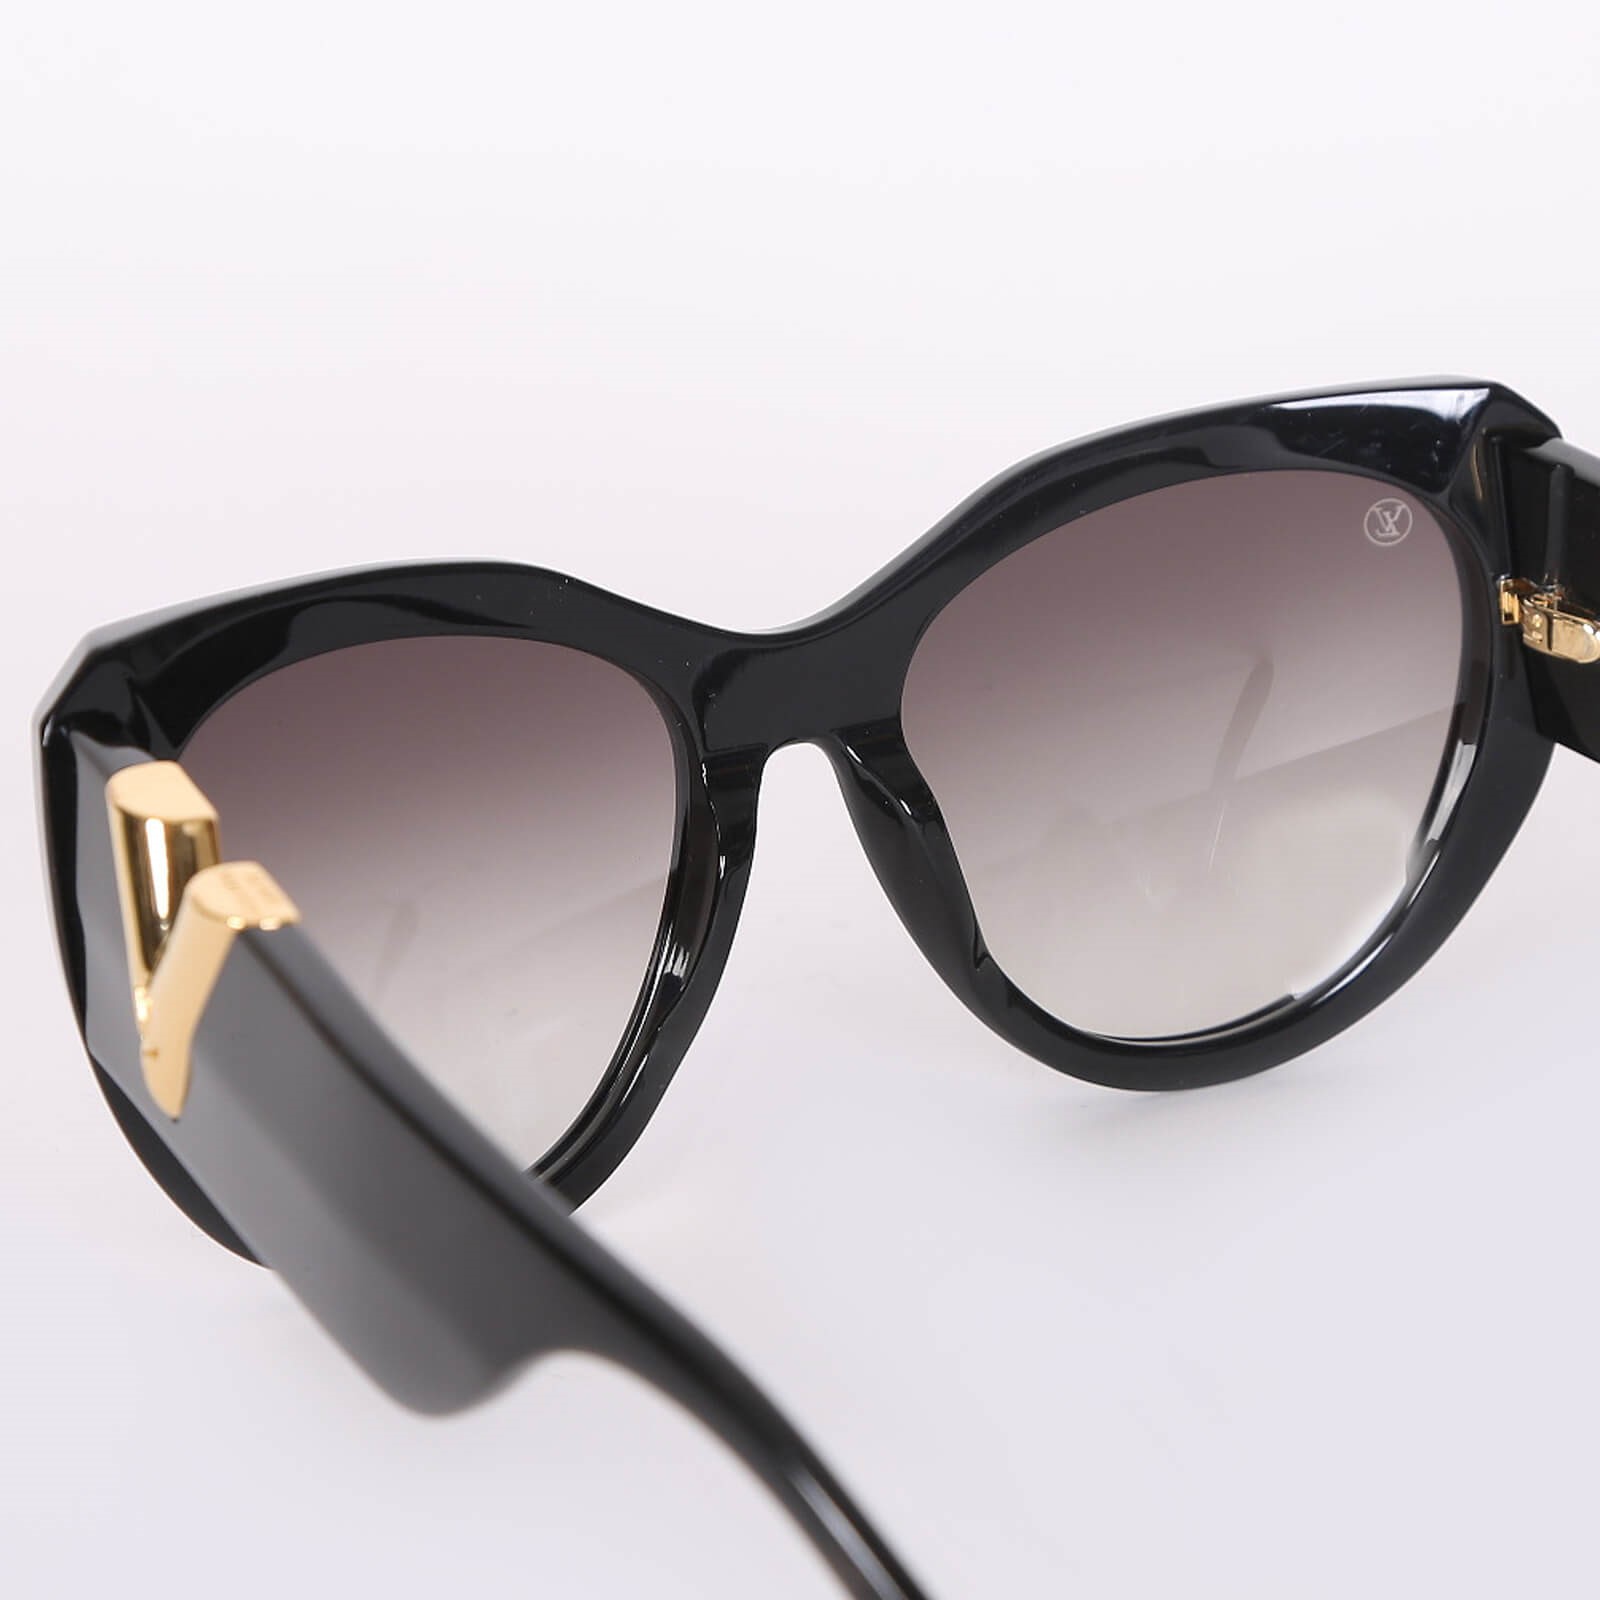 Louis Vuitton 2021 My Fair Lady Sunglasses - Black Sunglasses